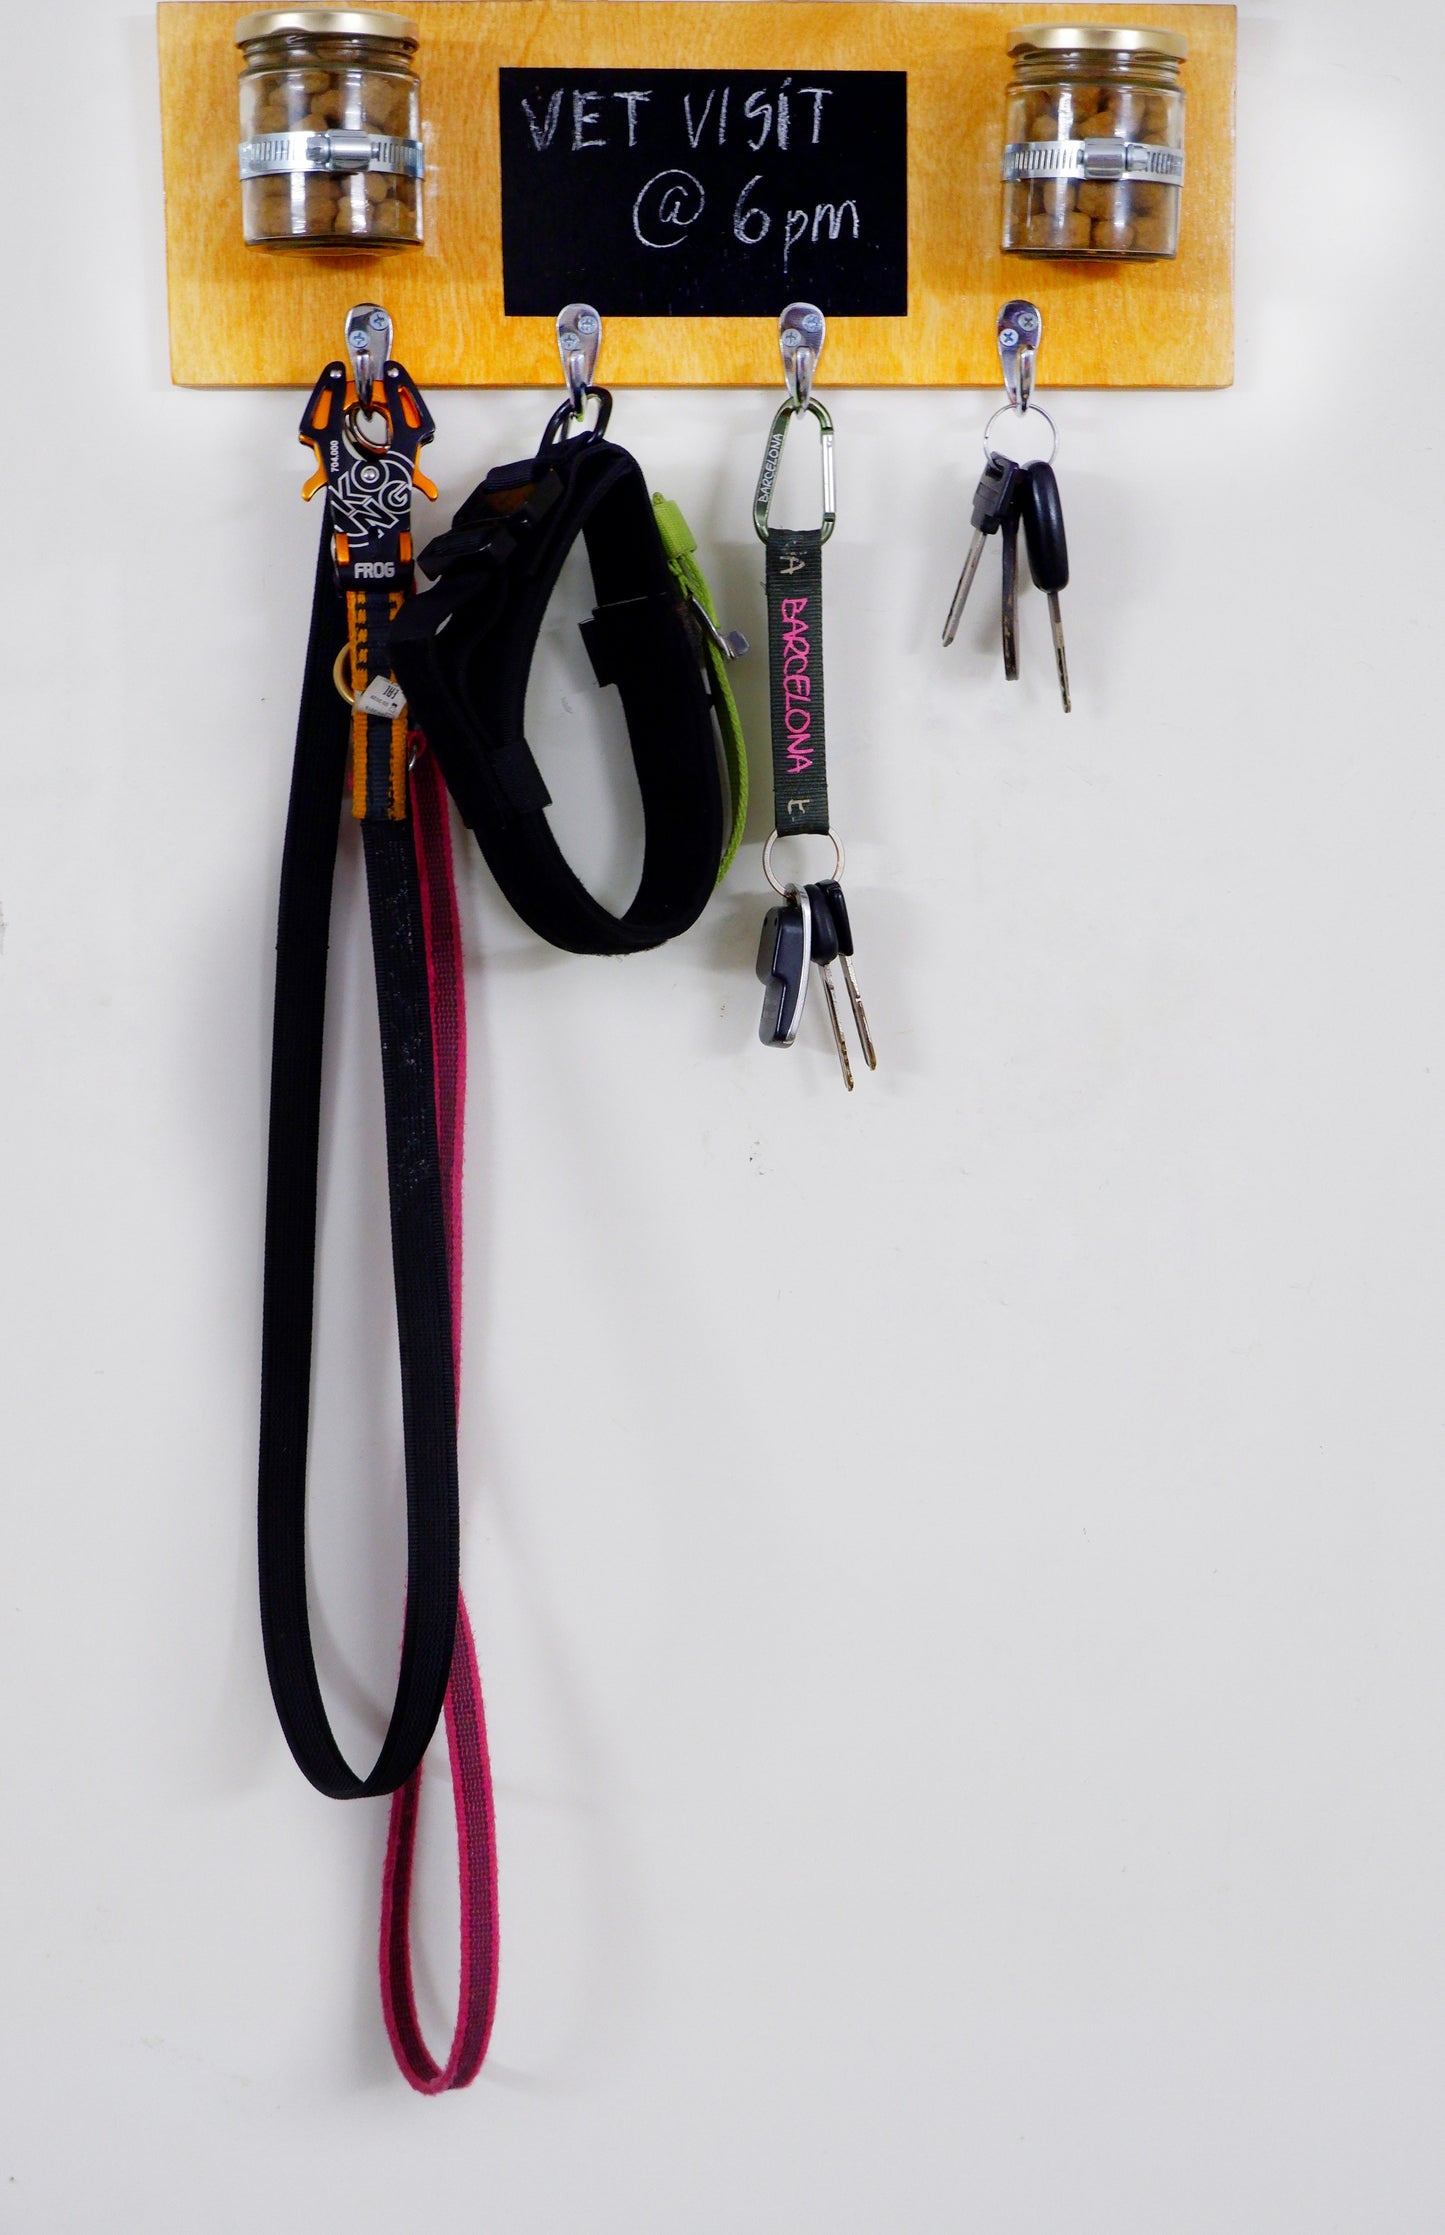 Petarchi Dog Leash Hanger with blackboard